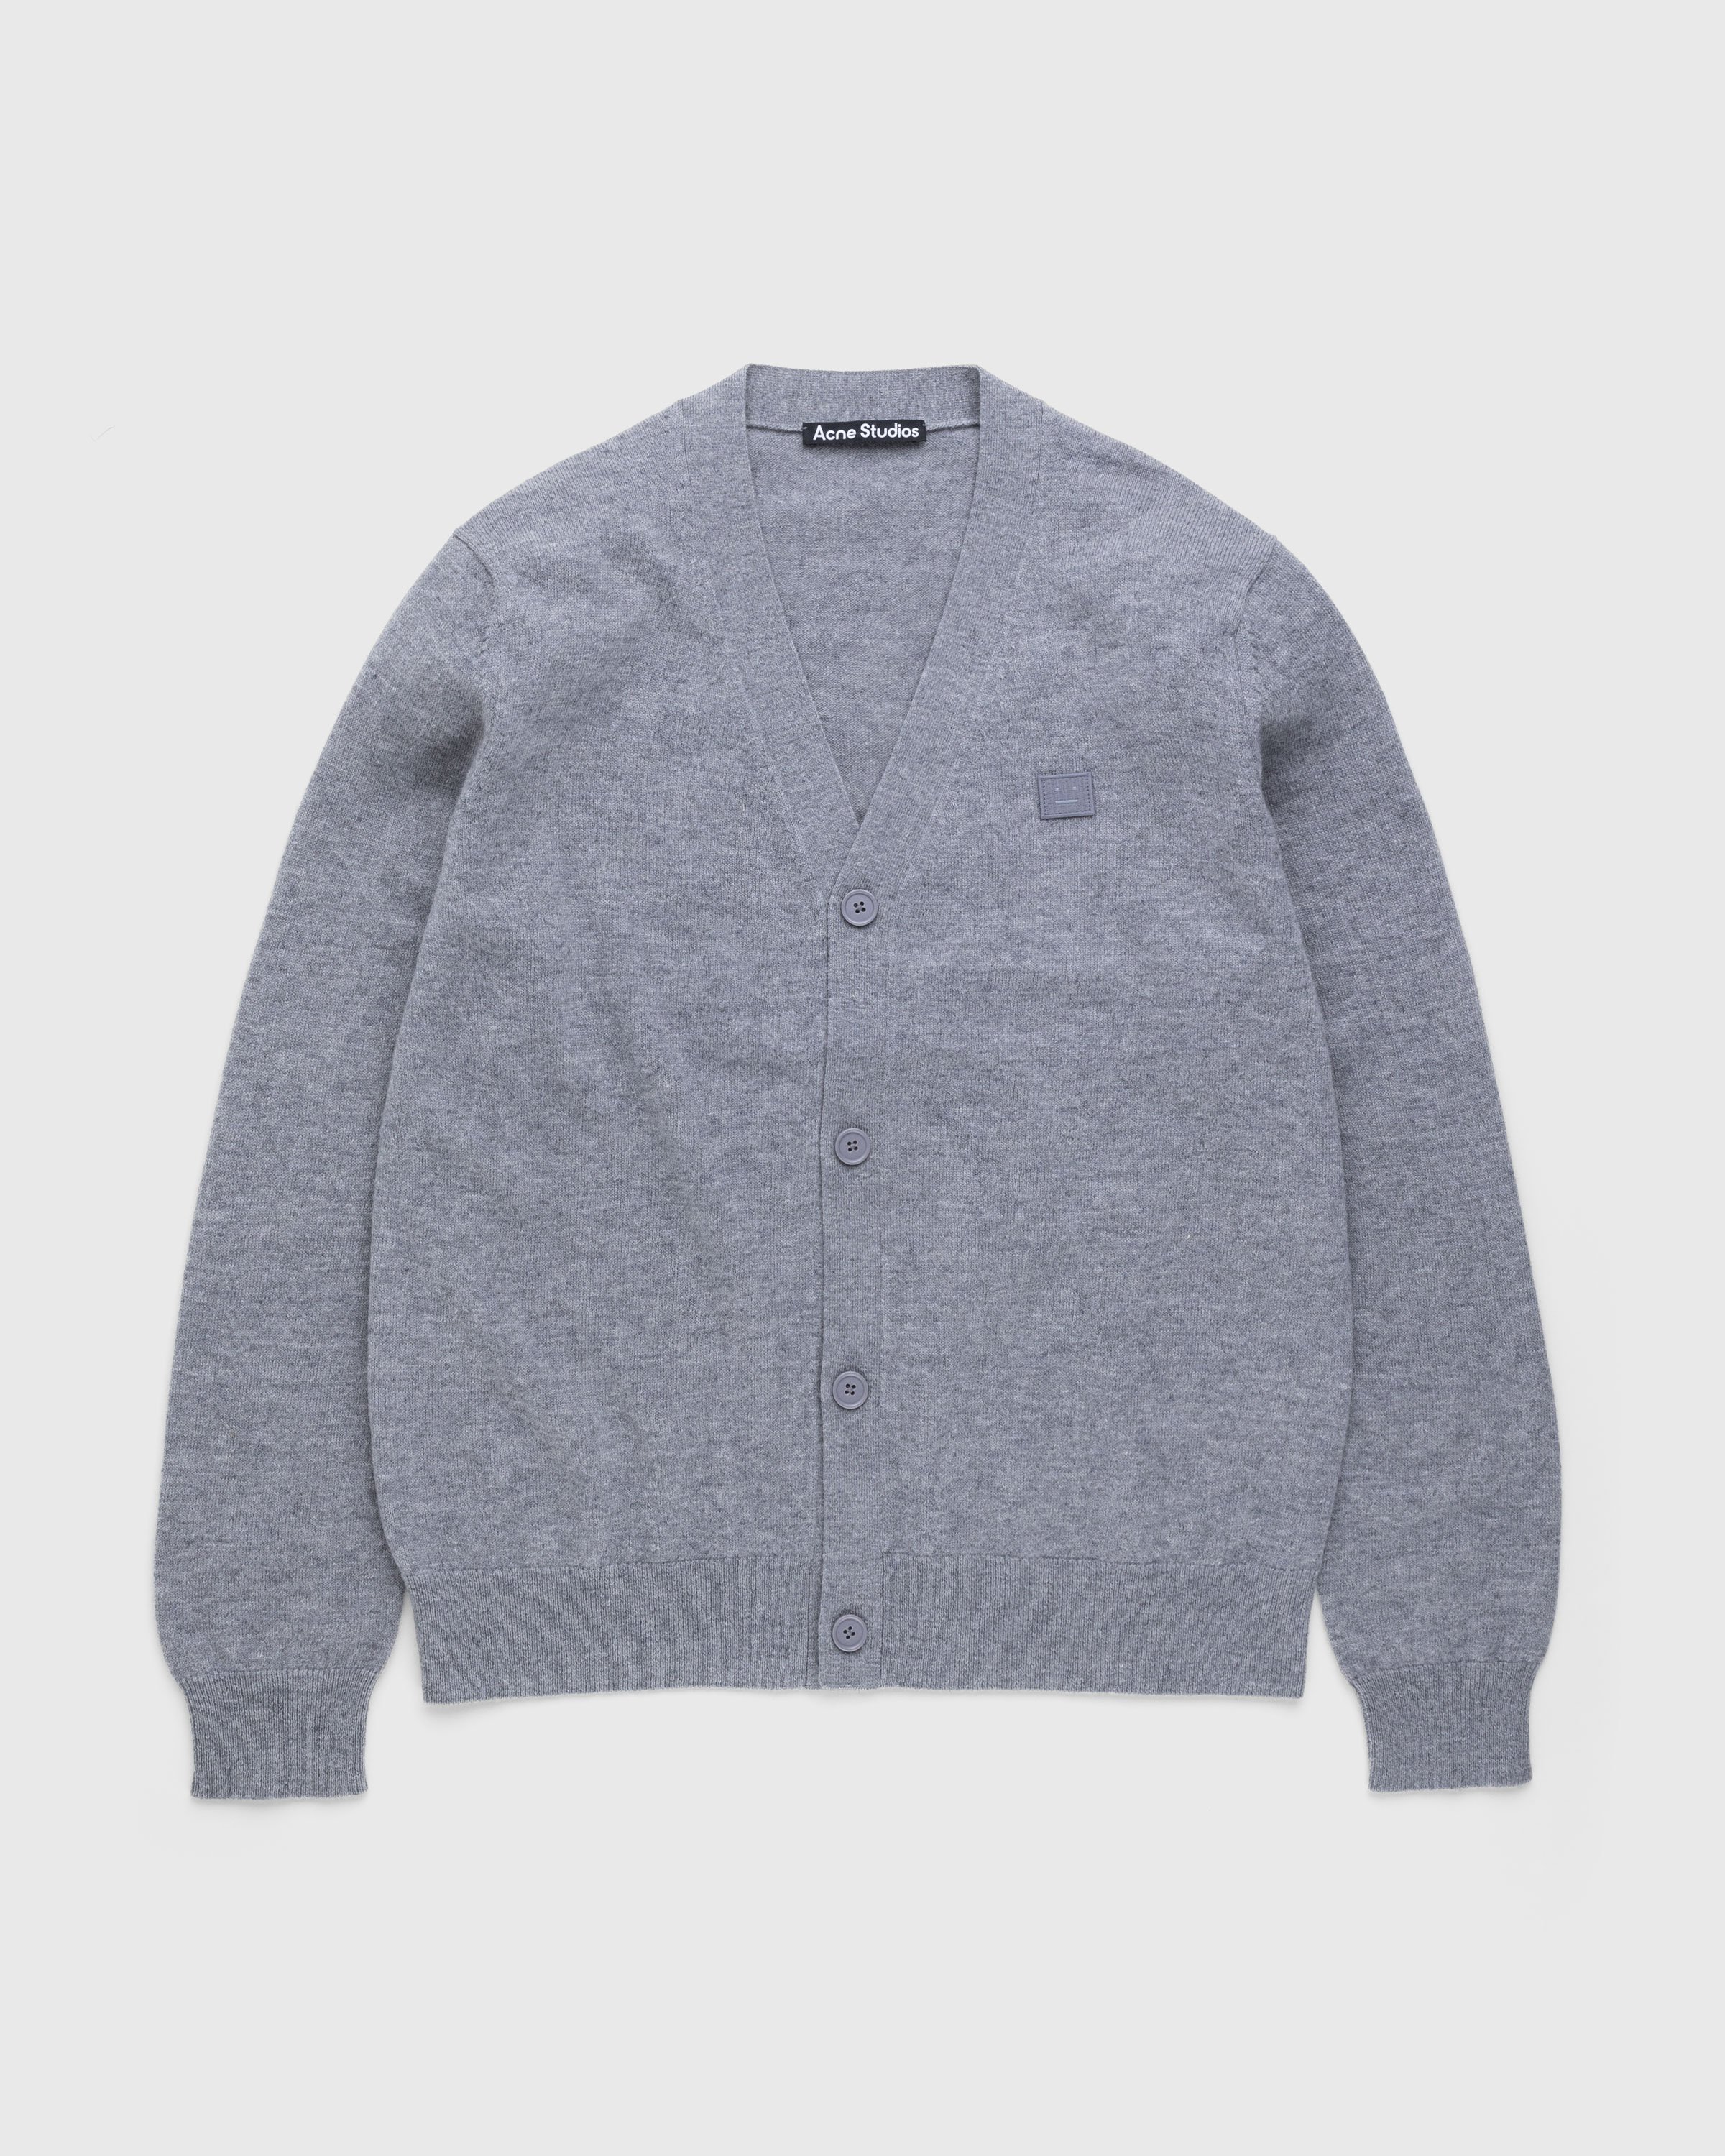 Acne Studios - Knit Wool Cardigan Grey - Clothing - Grey - Image 1